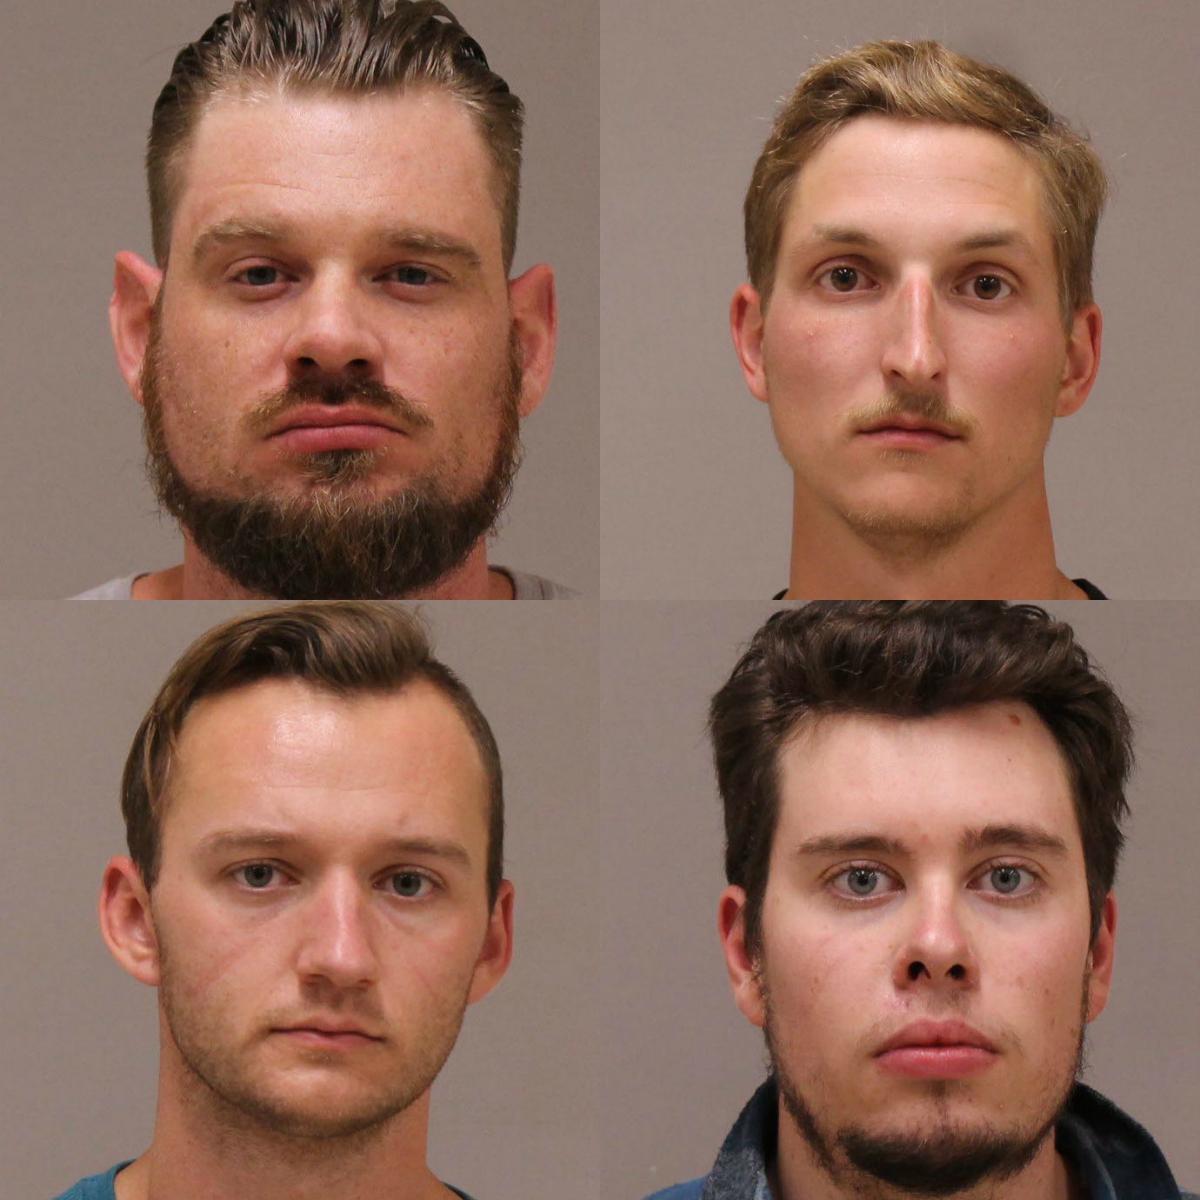 (From top left clockwise) Adam Fox, Daniel Harris, Kaleb Franks, and Ty Garbin in booking photos. (Kent County Jail)